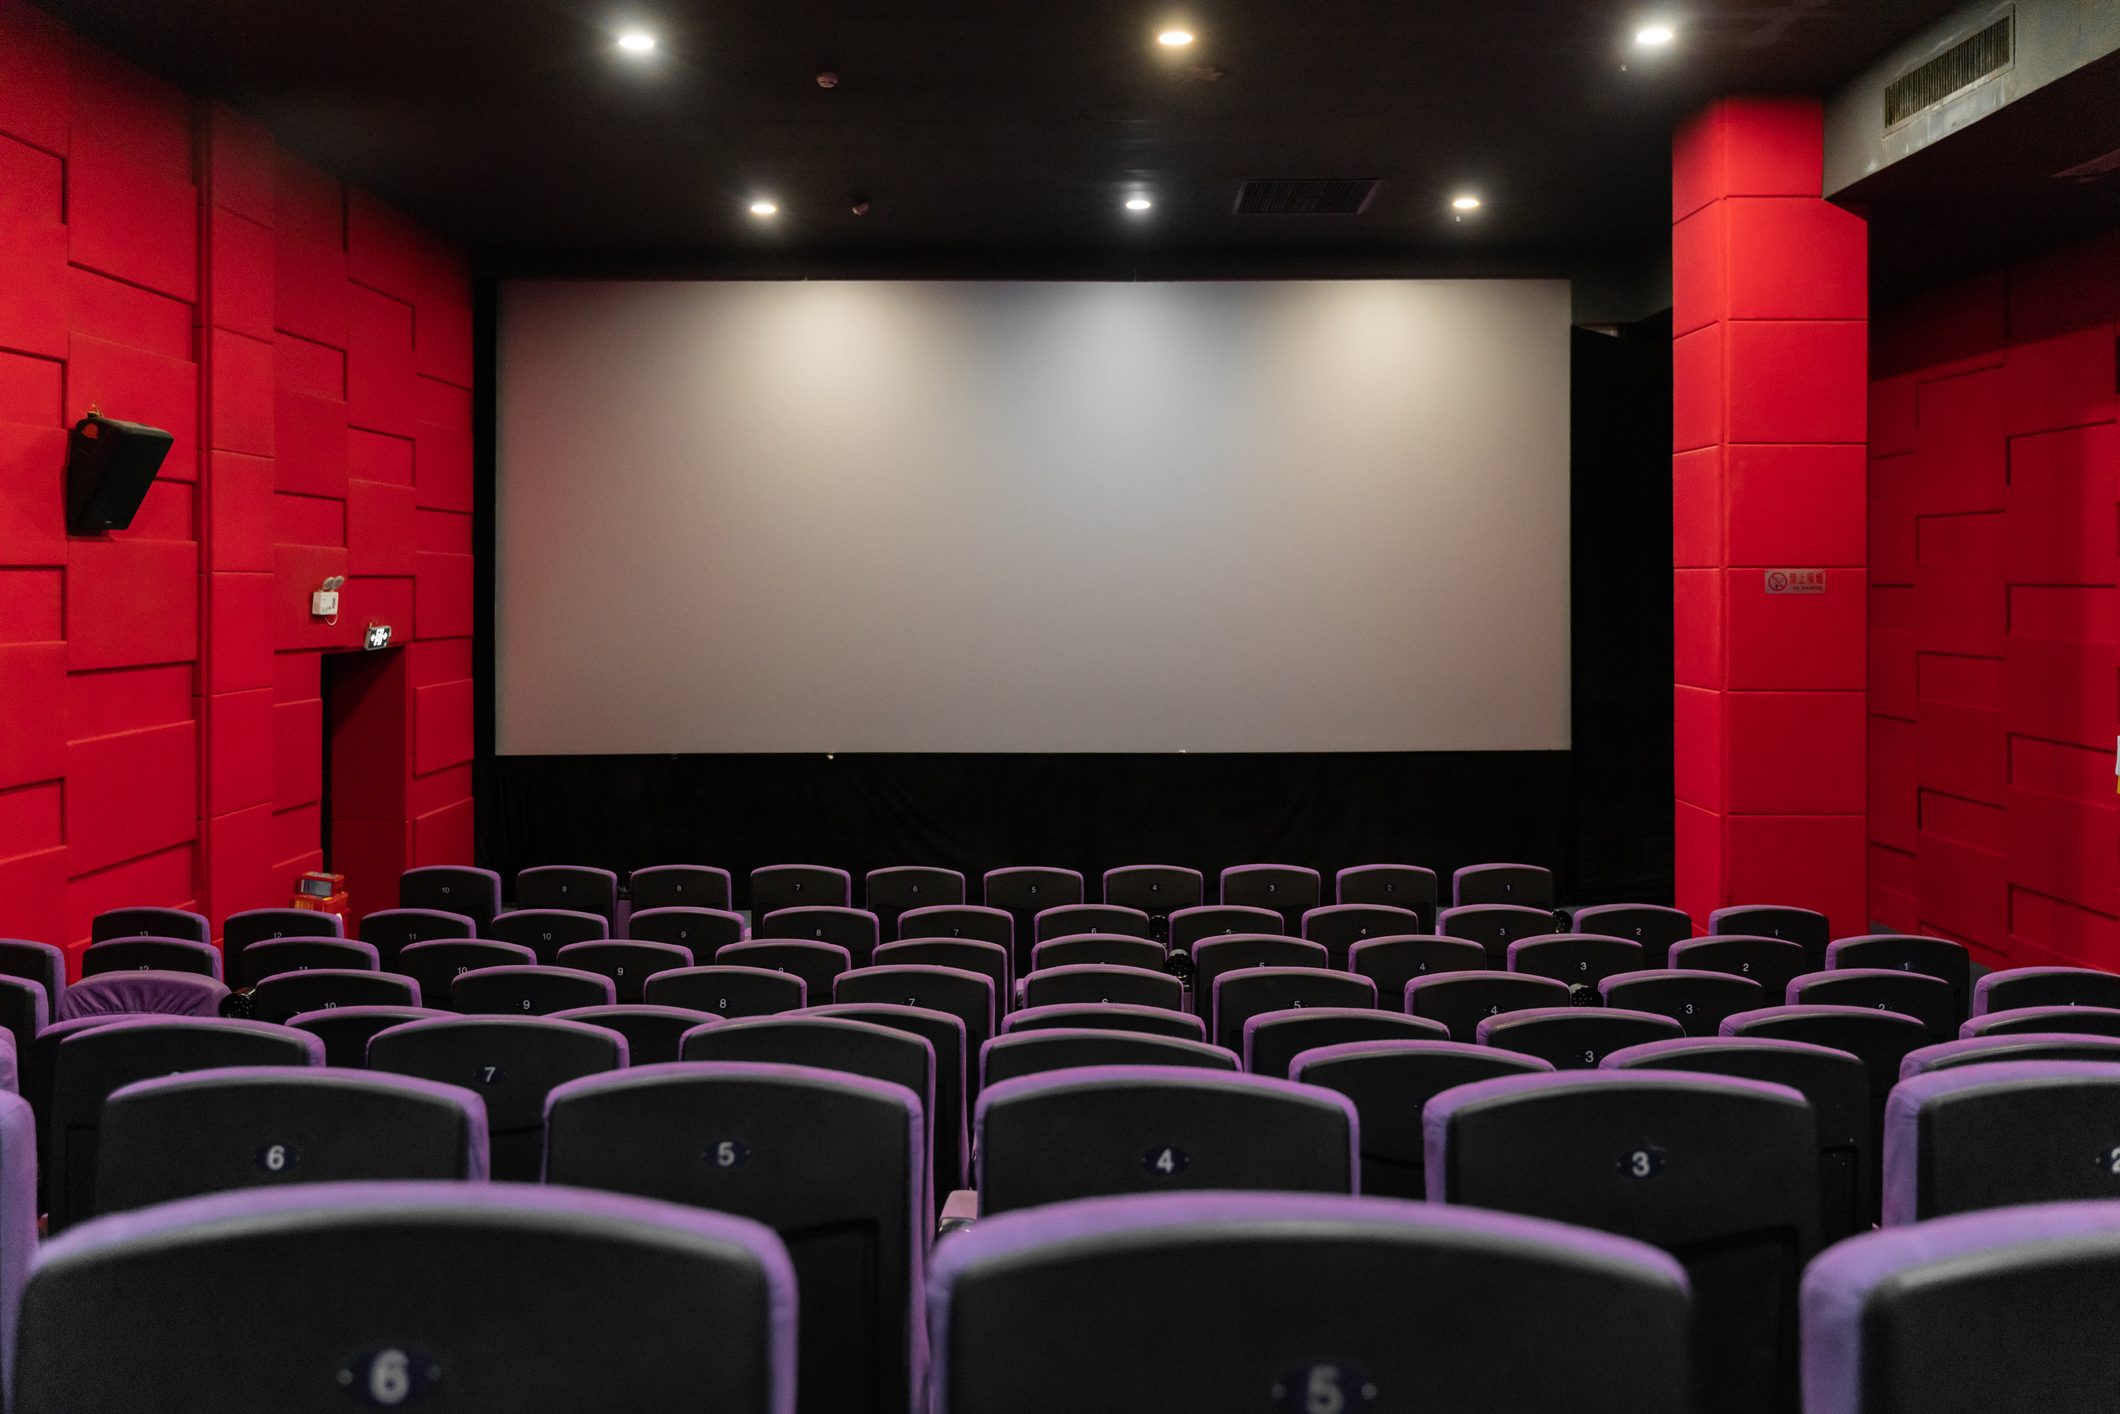 Empty Cinema with Empty seats